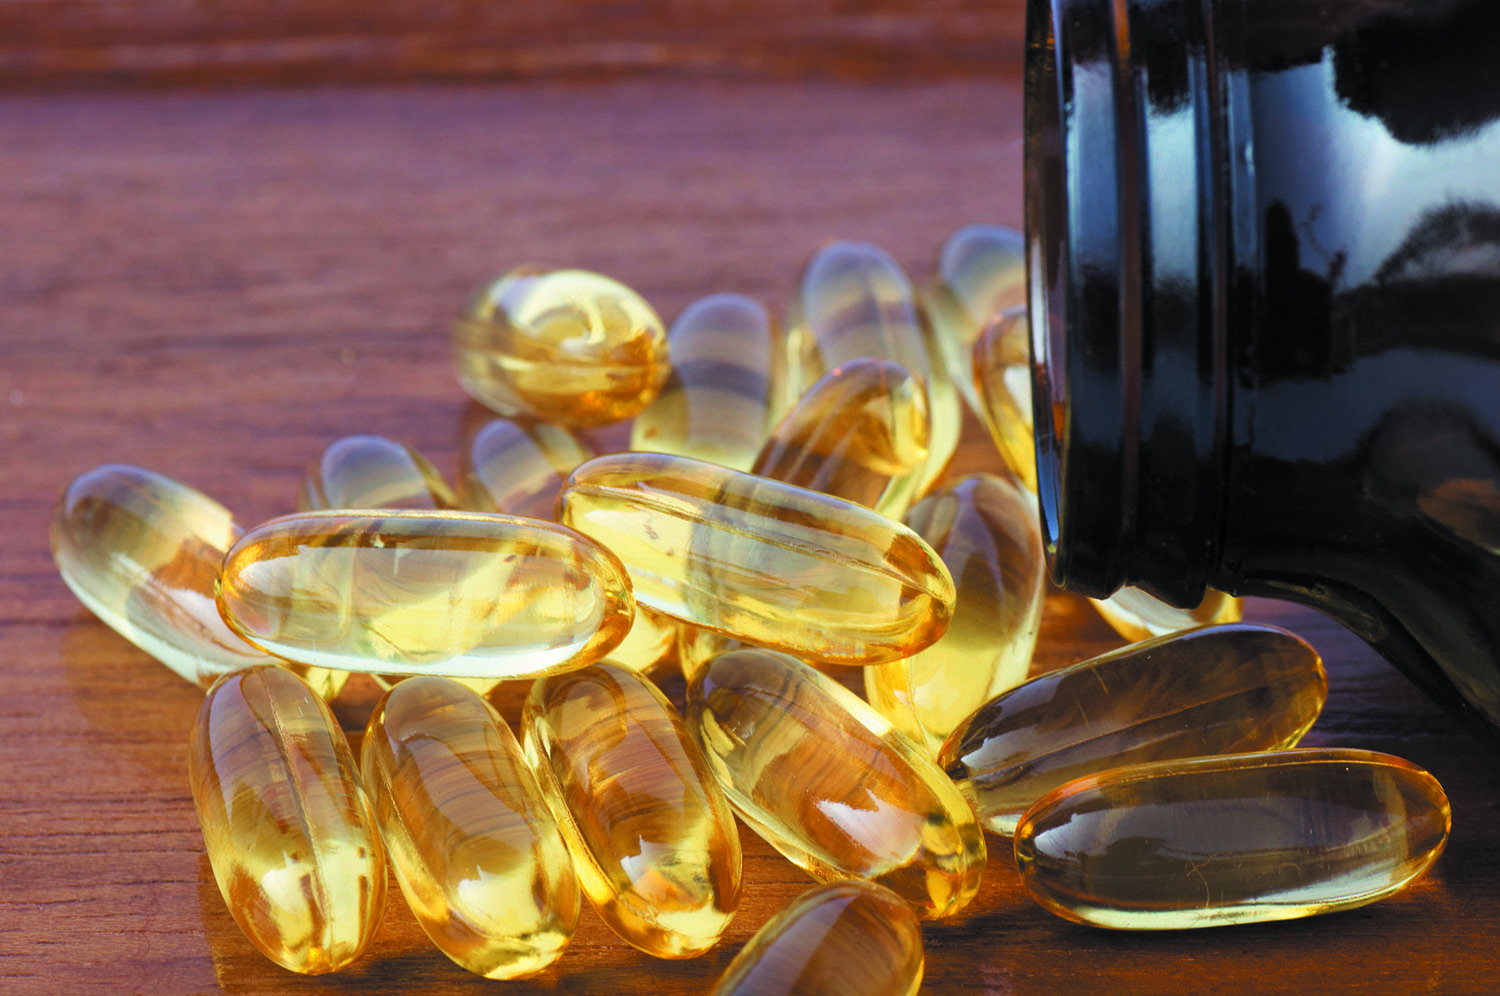 Vitamin D And Omega 3 Fatty Acids Supplements Fall Short